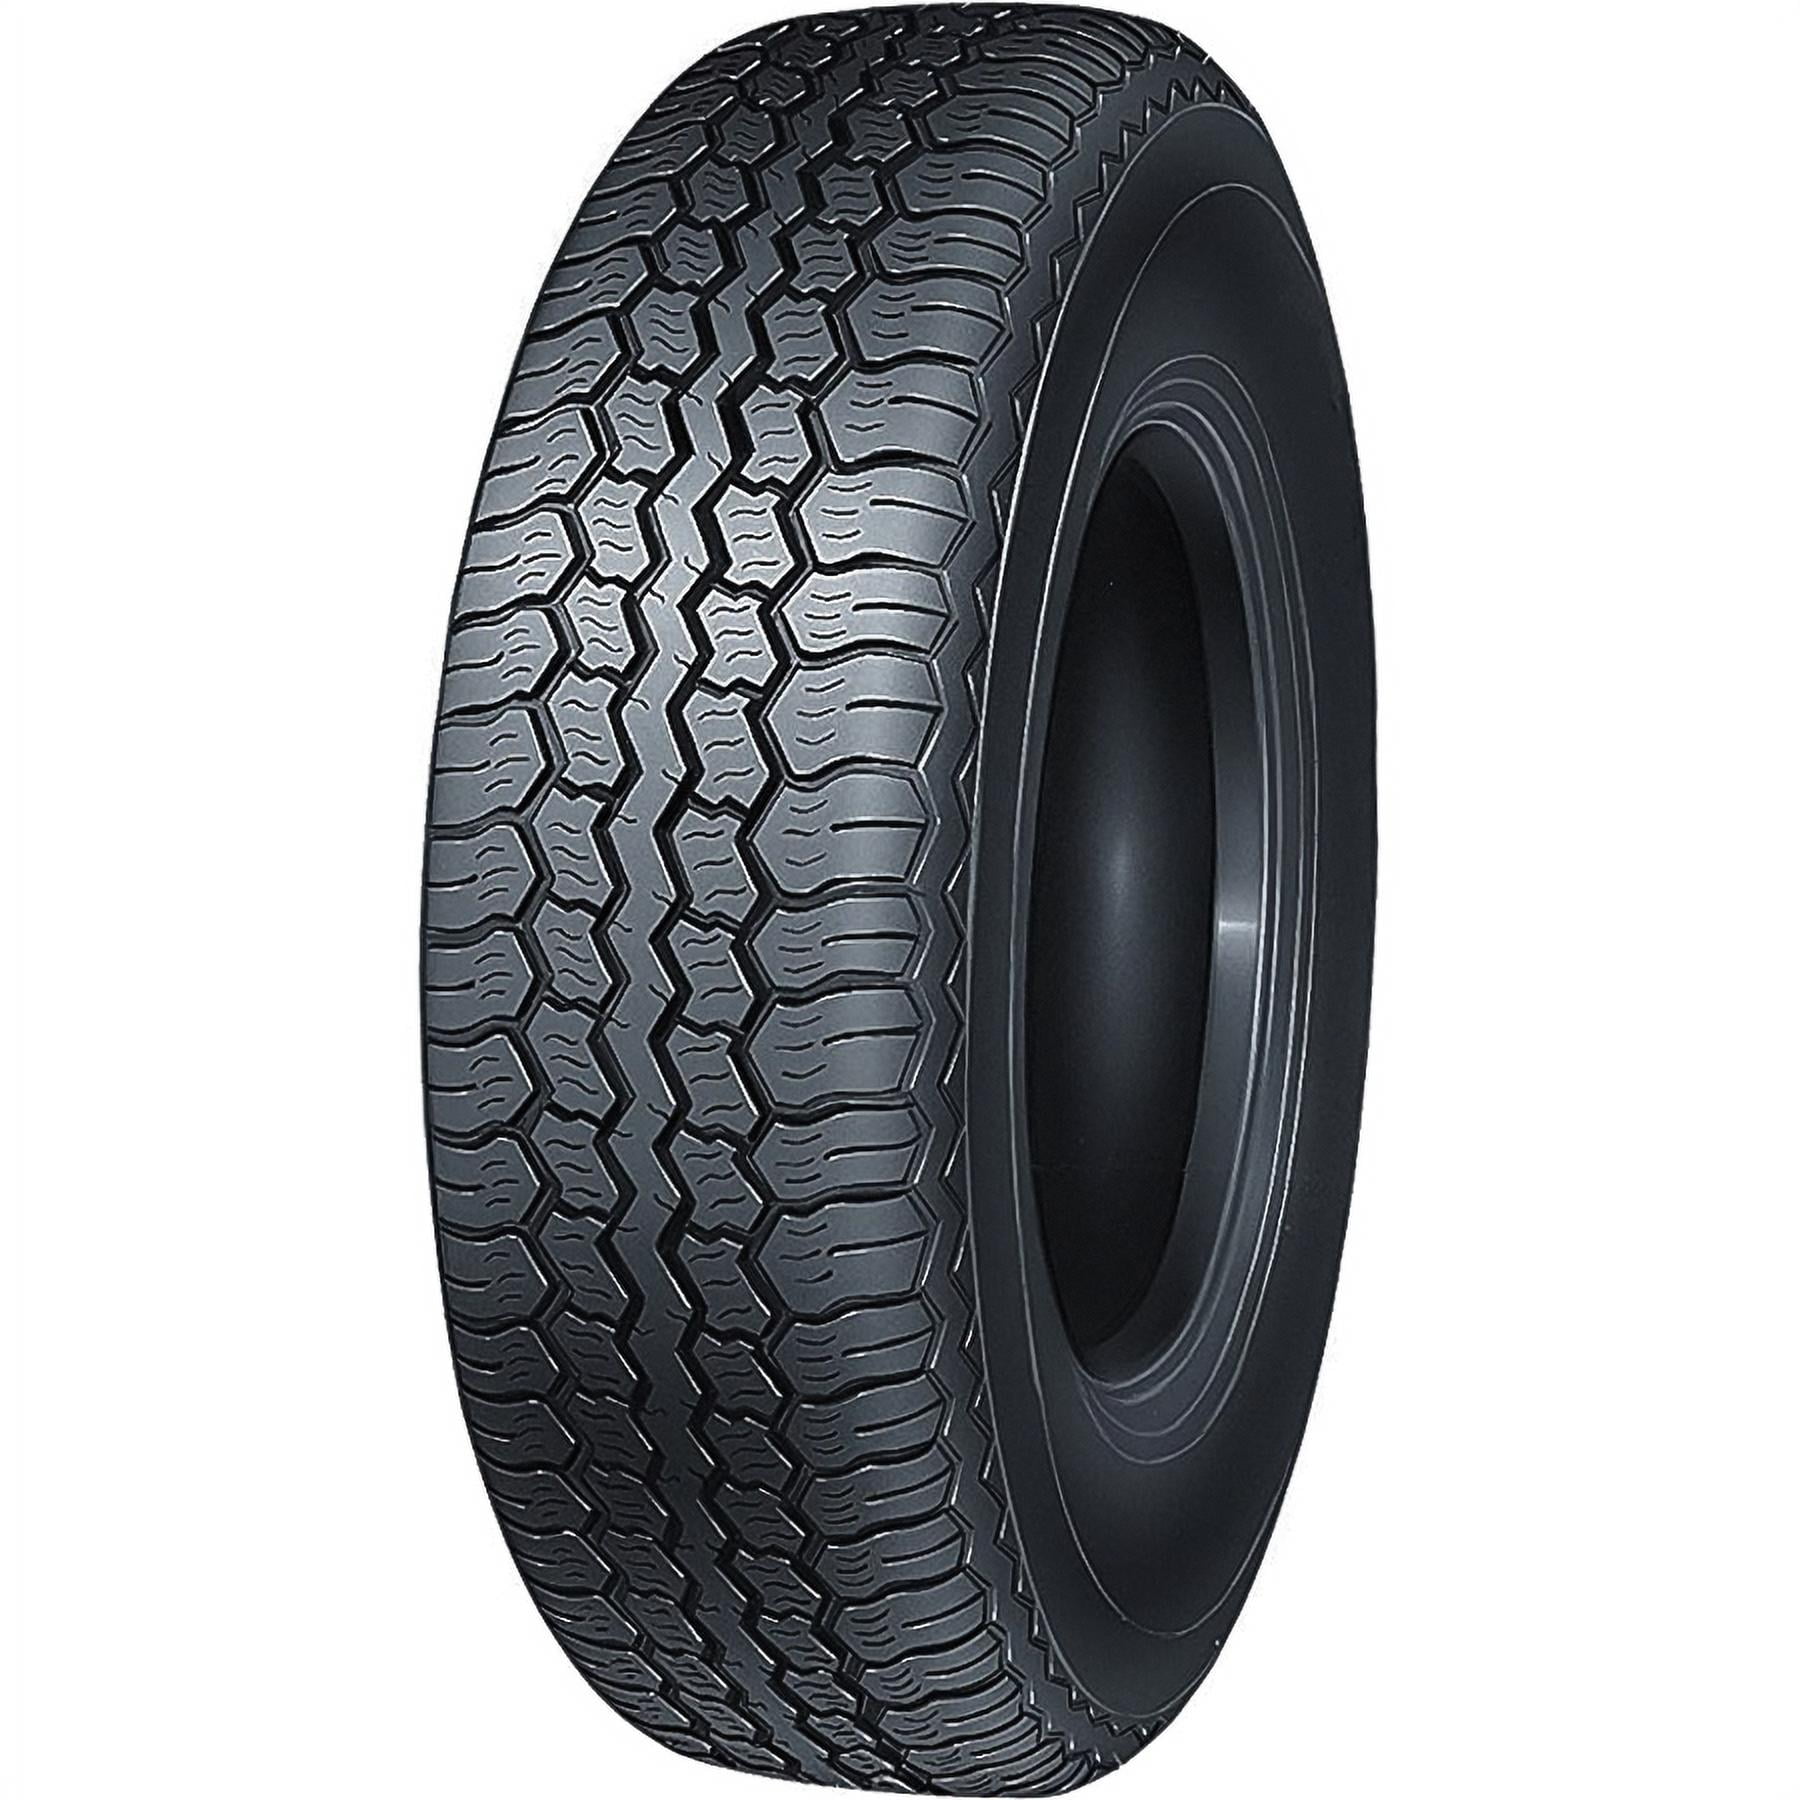 Prometer LL821 All-Season Tire 195/65R15 91H 